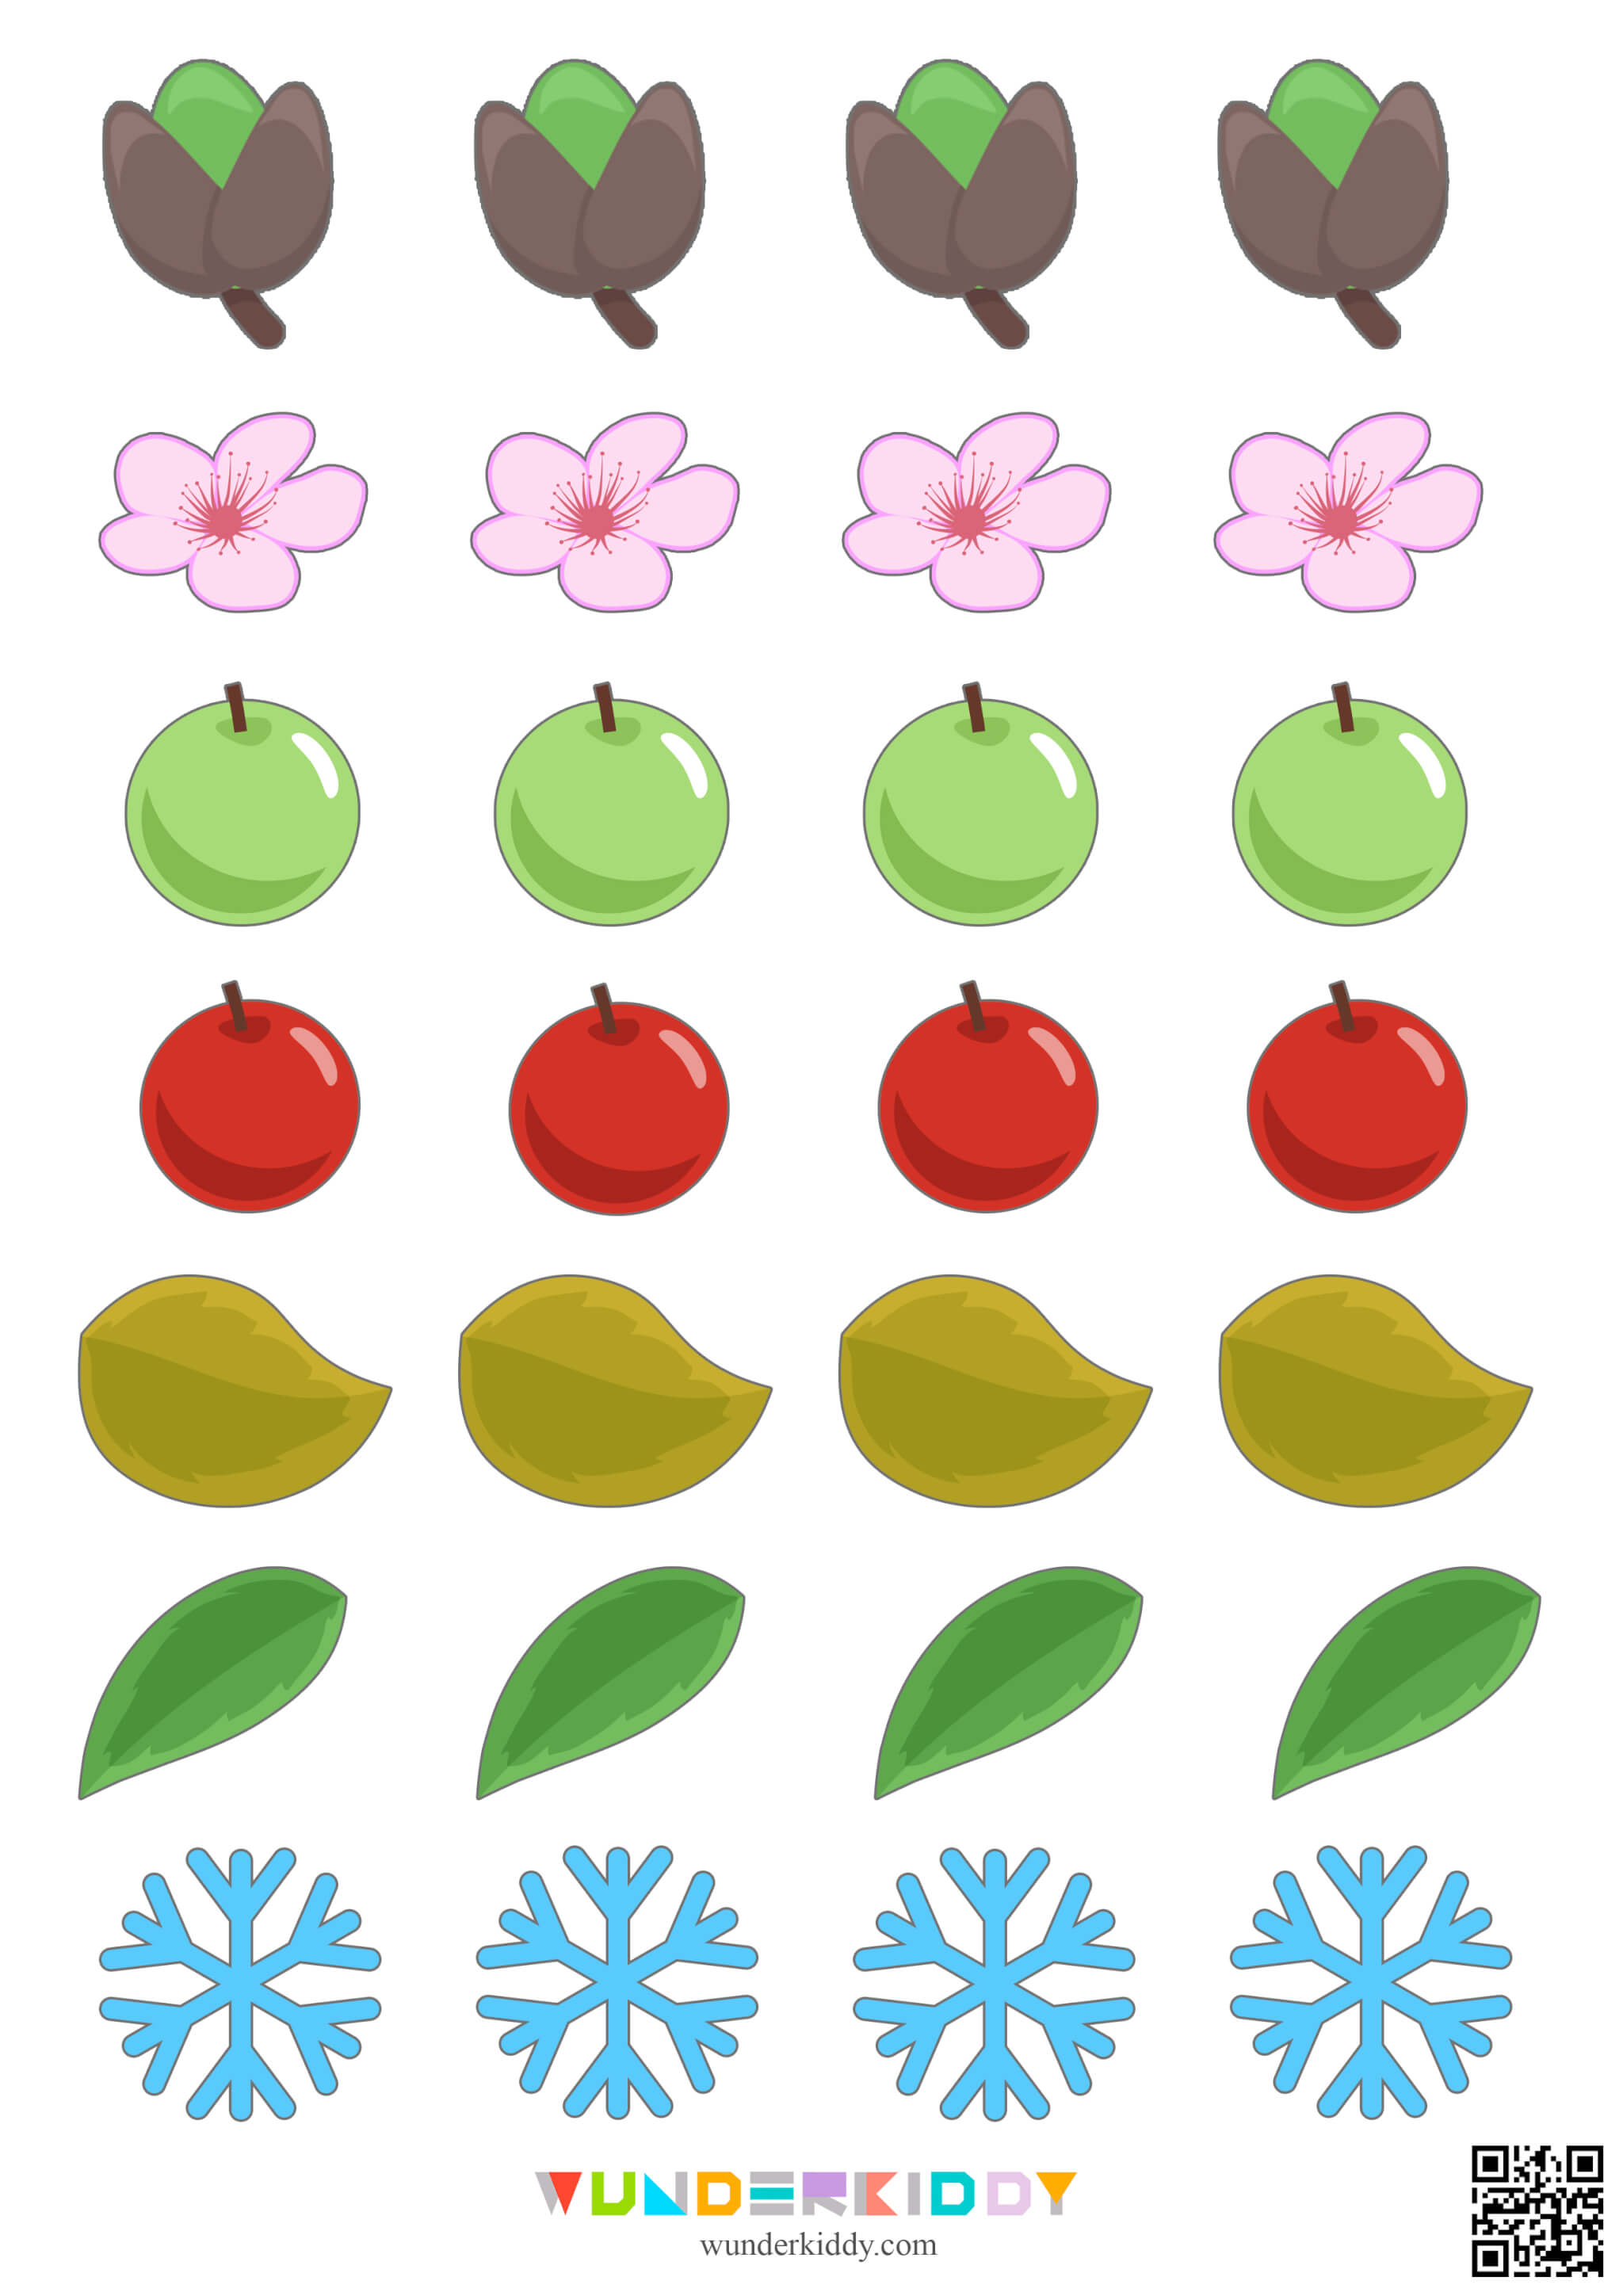 Four Seasons Tree Matching Activity - Image 7